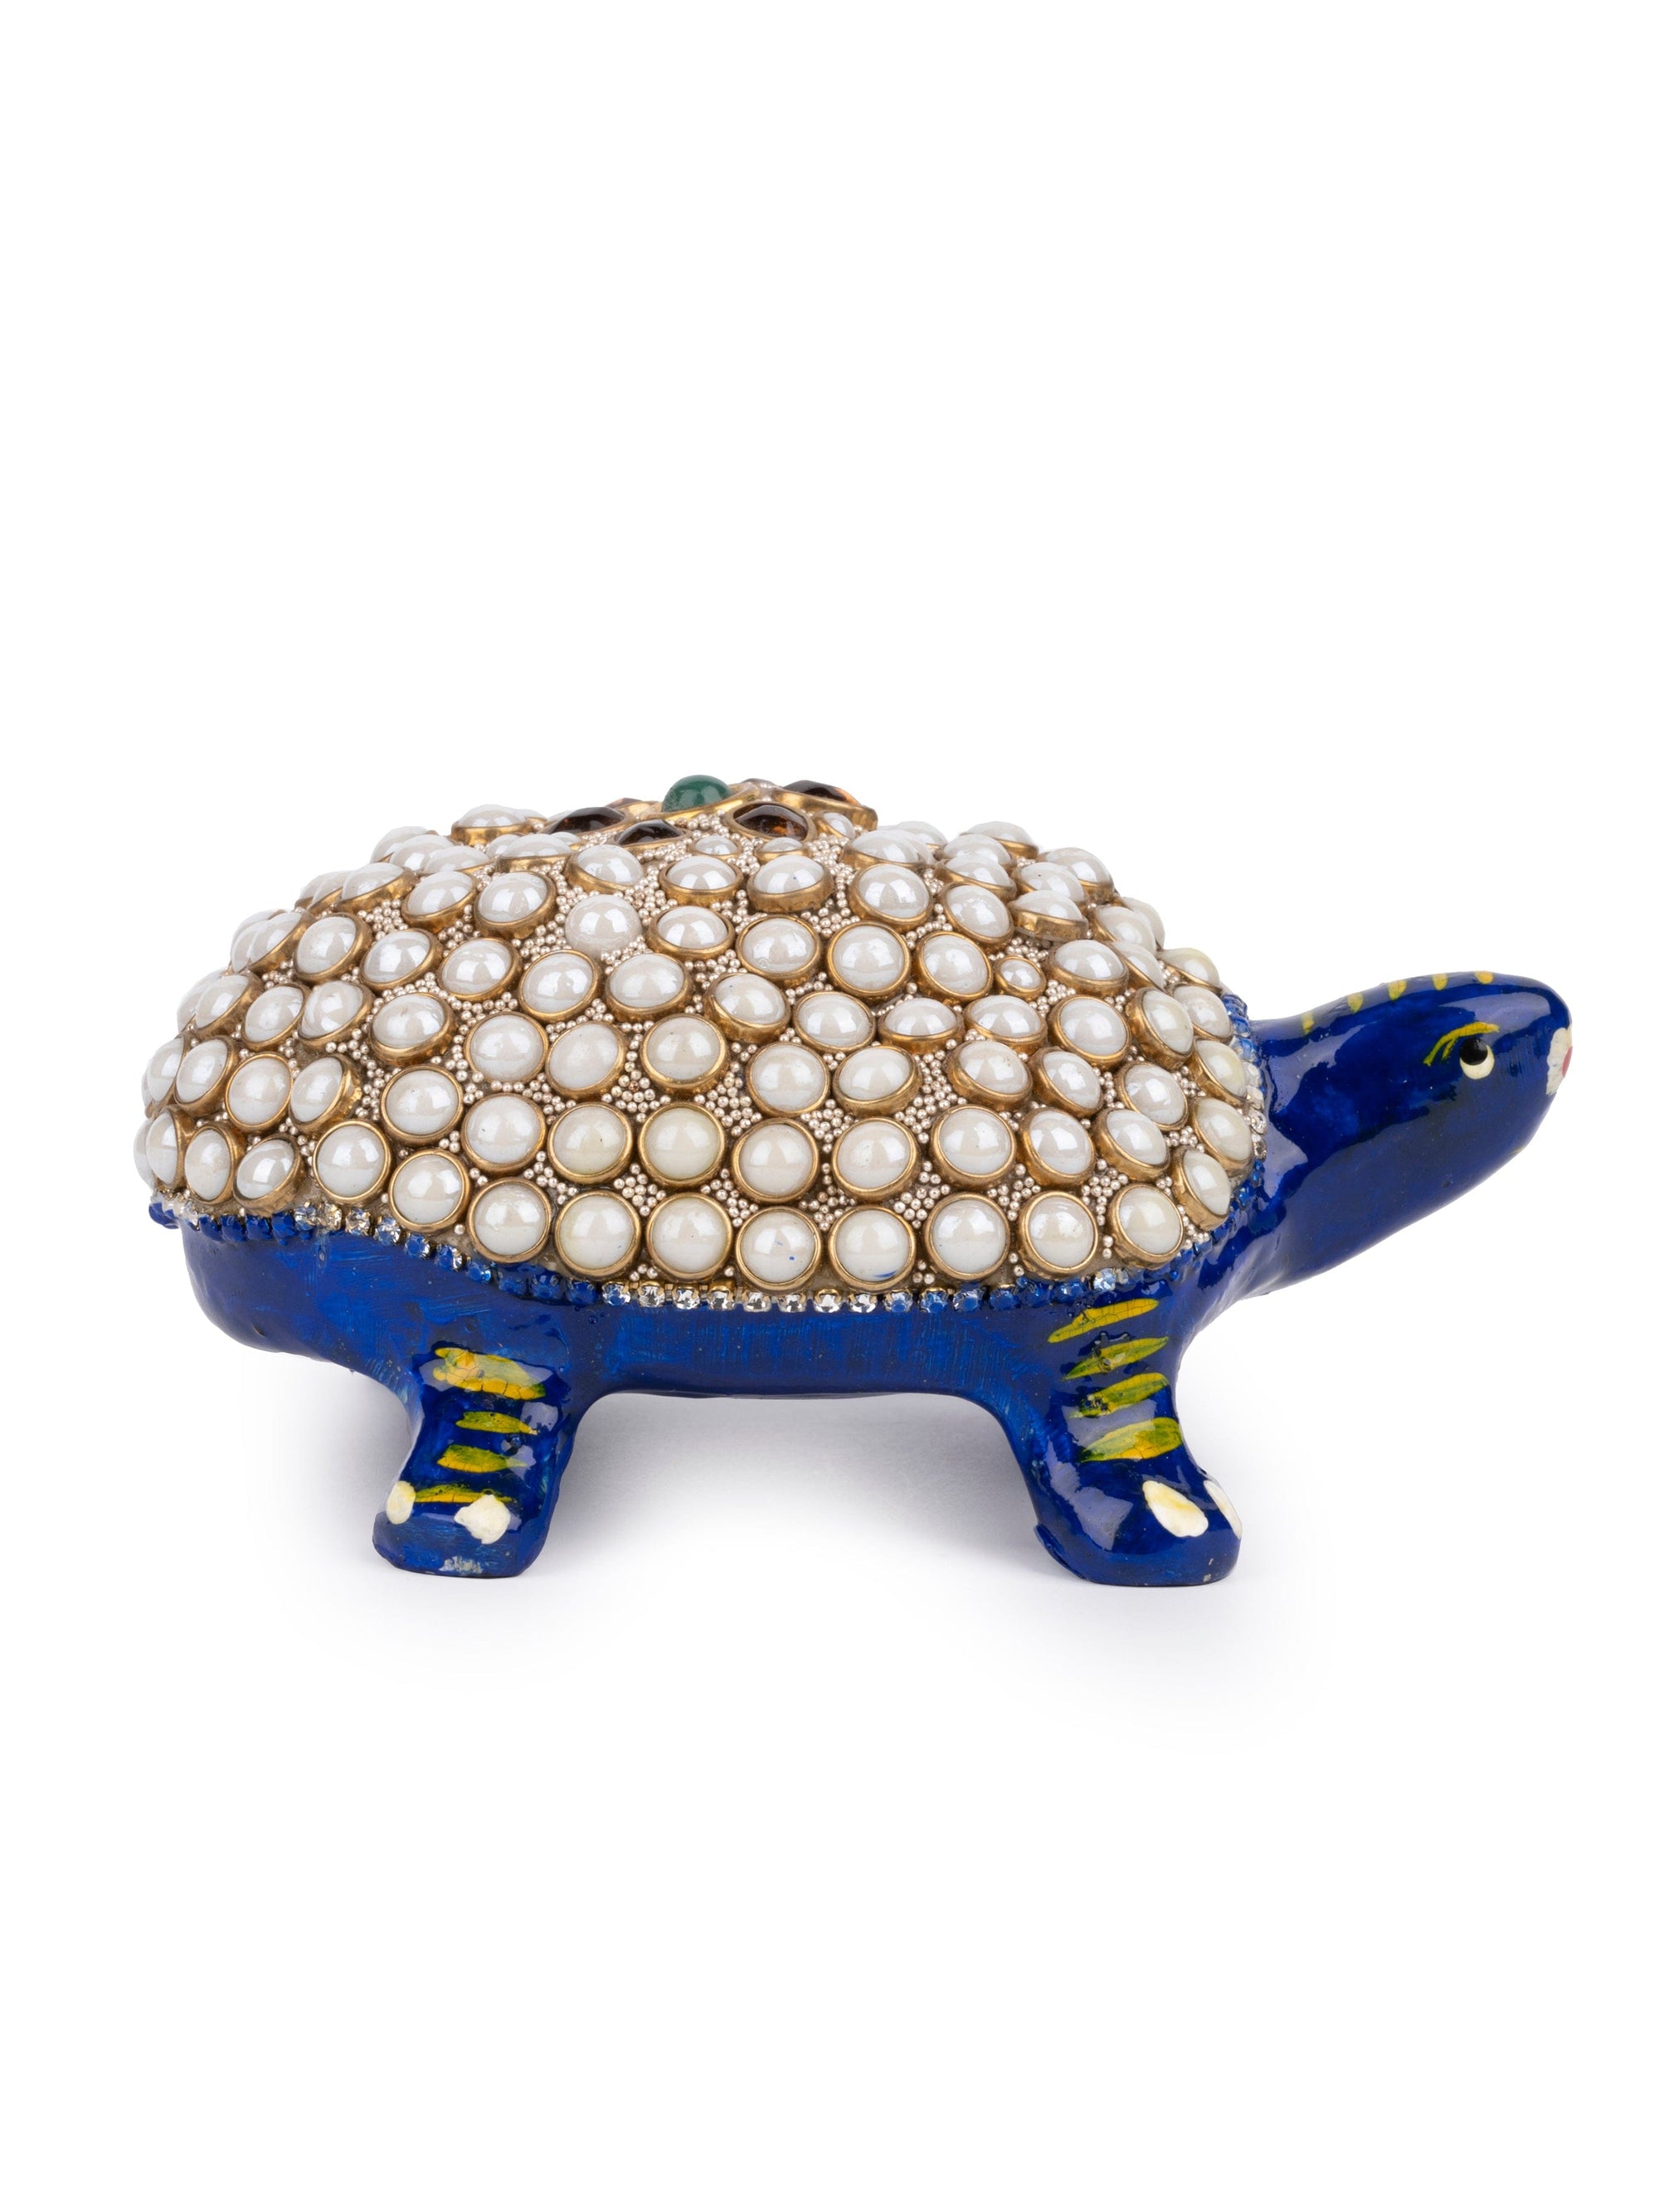 Meenakari and Kundan Work Metal Tortoise Decorative Showpiece - The Heritage Artifacts